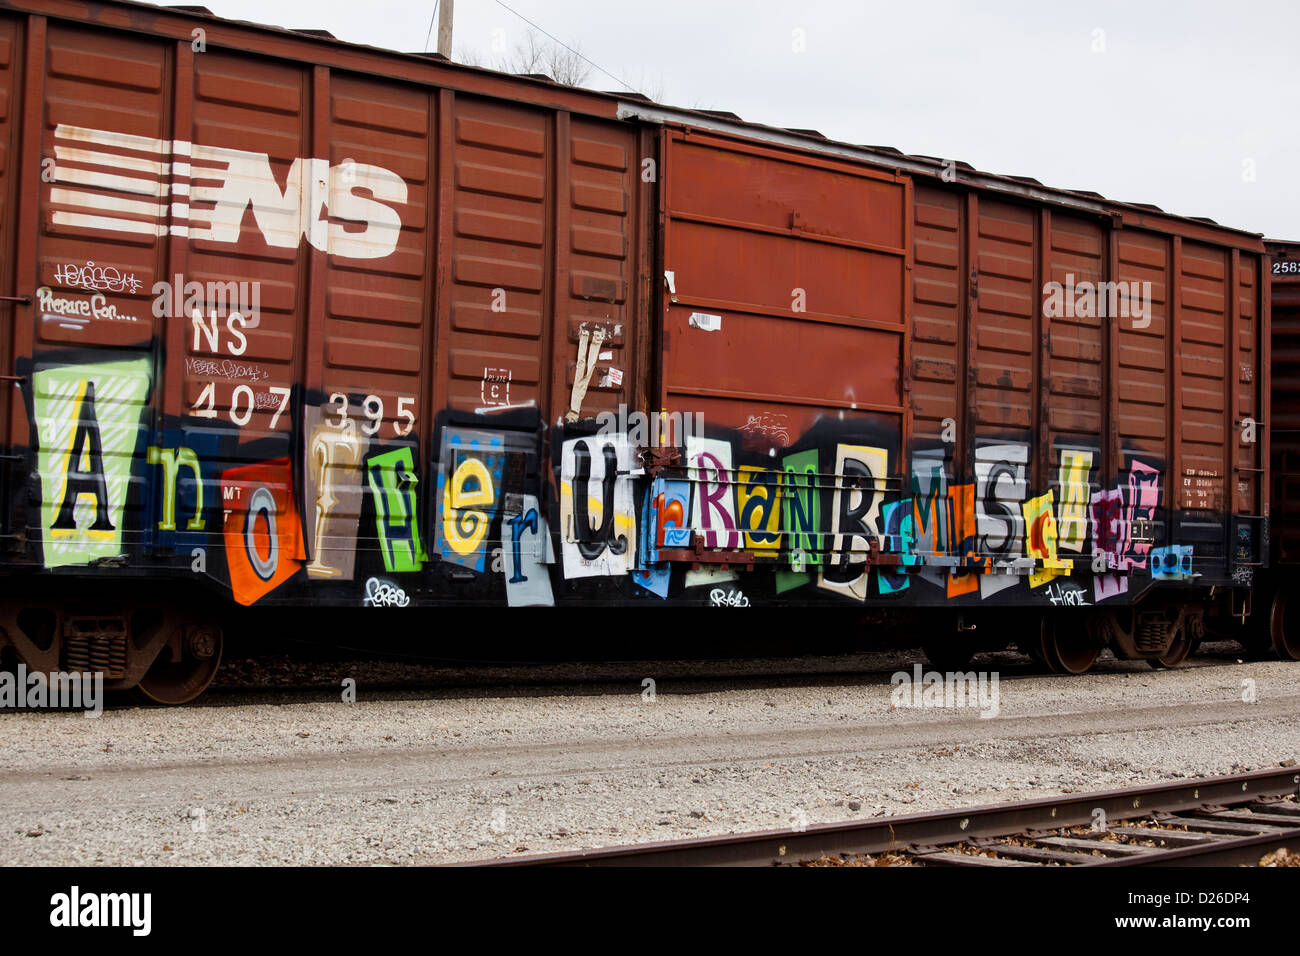 Train with graffiti message Stock Photo